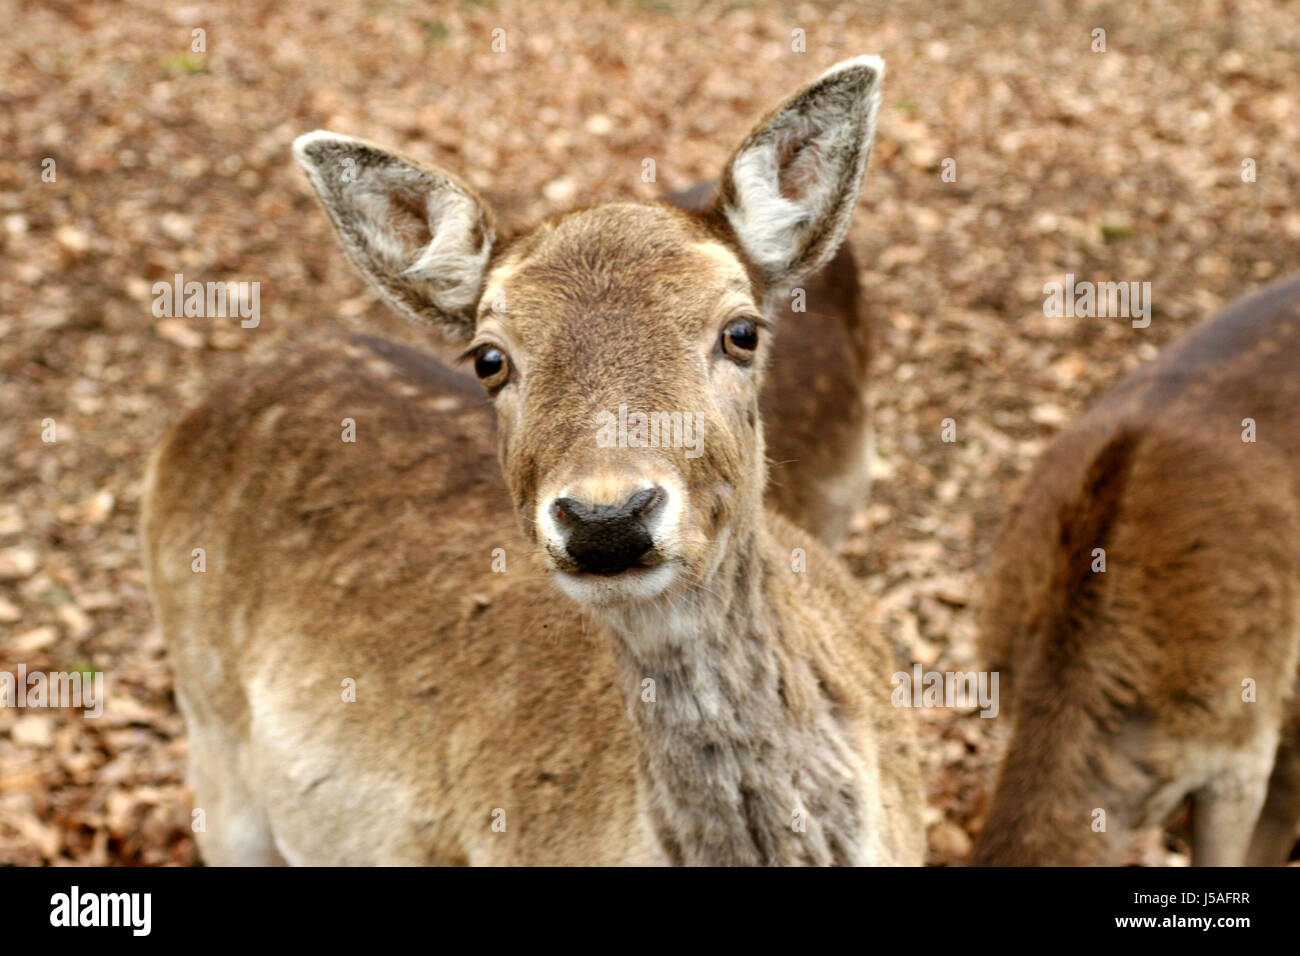 fodder curiosity wild animals look glancing see view looking peeking looking at Stock Photo